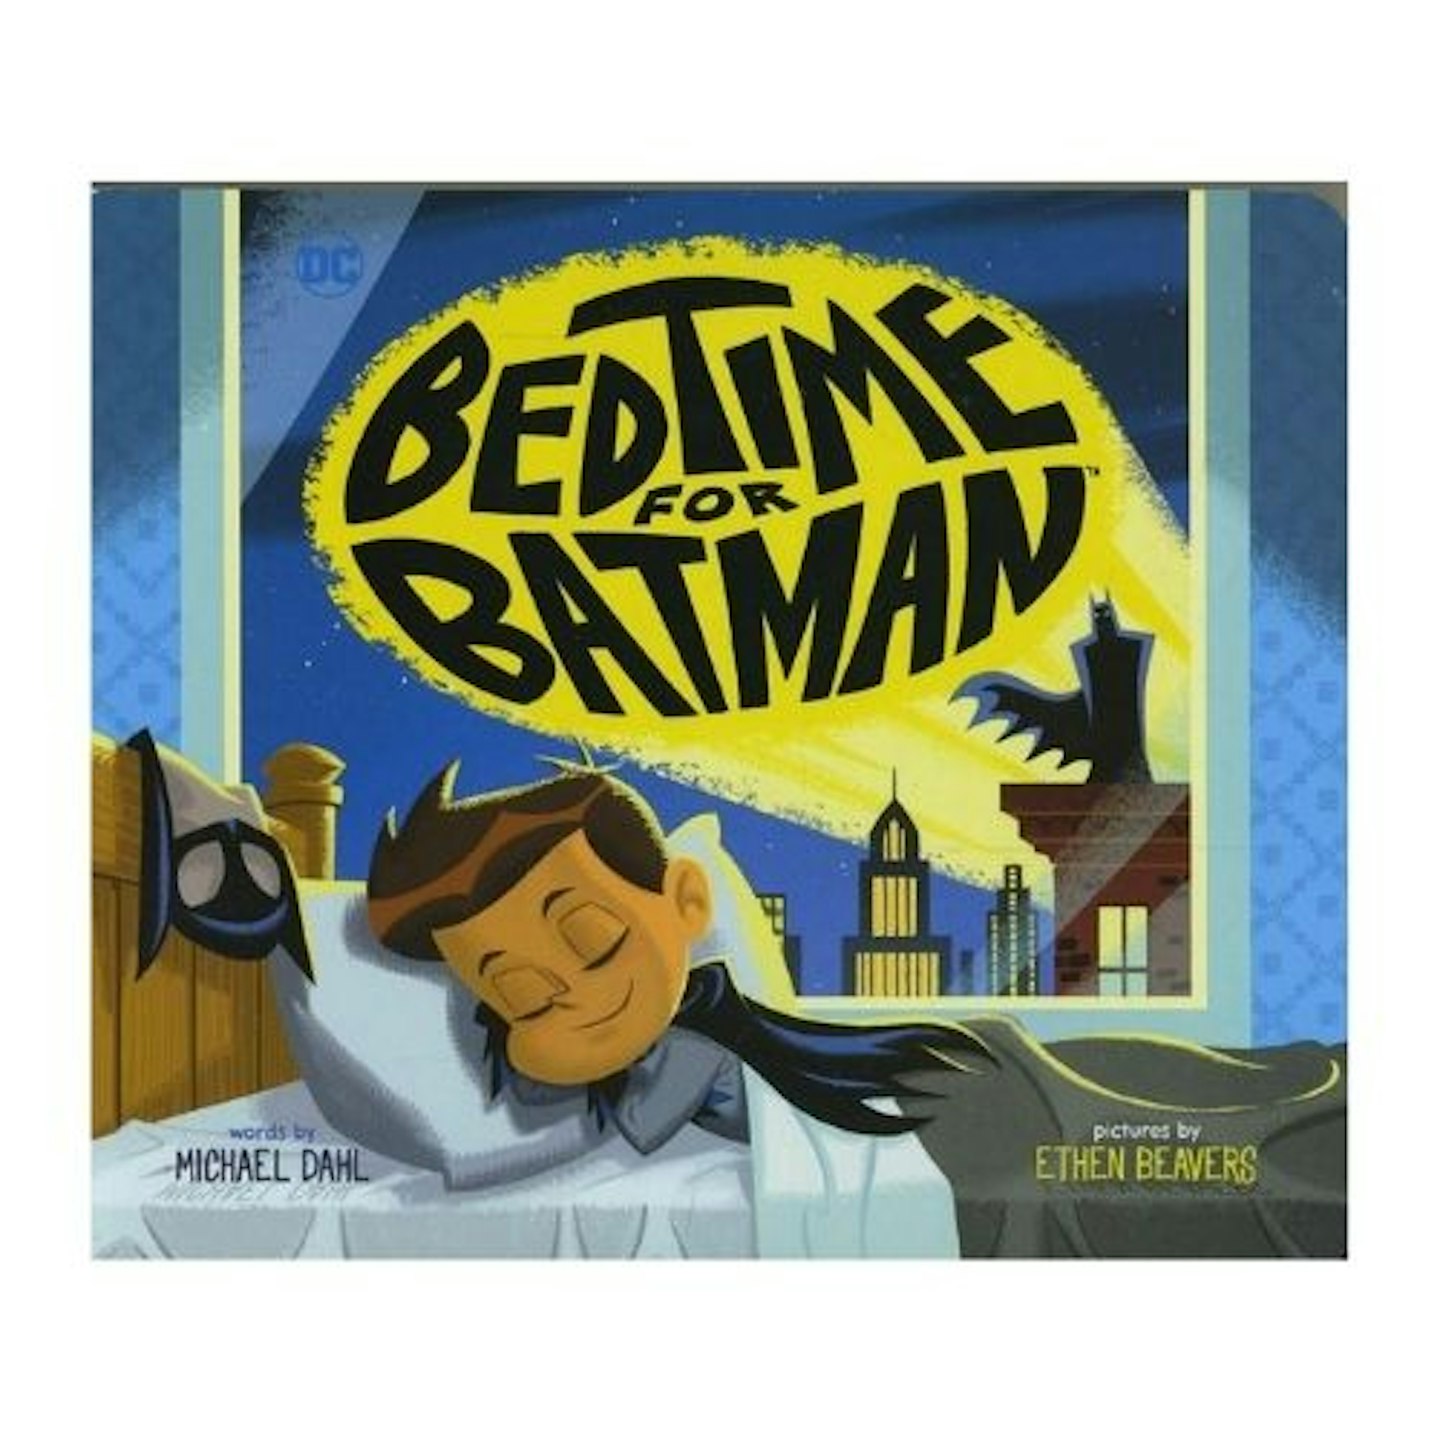 Bedtime for Batman: 23 (DC Super Heroes)